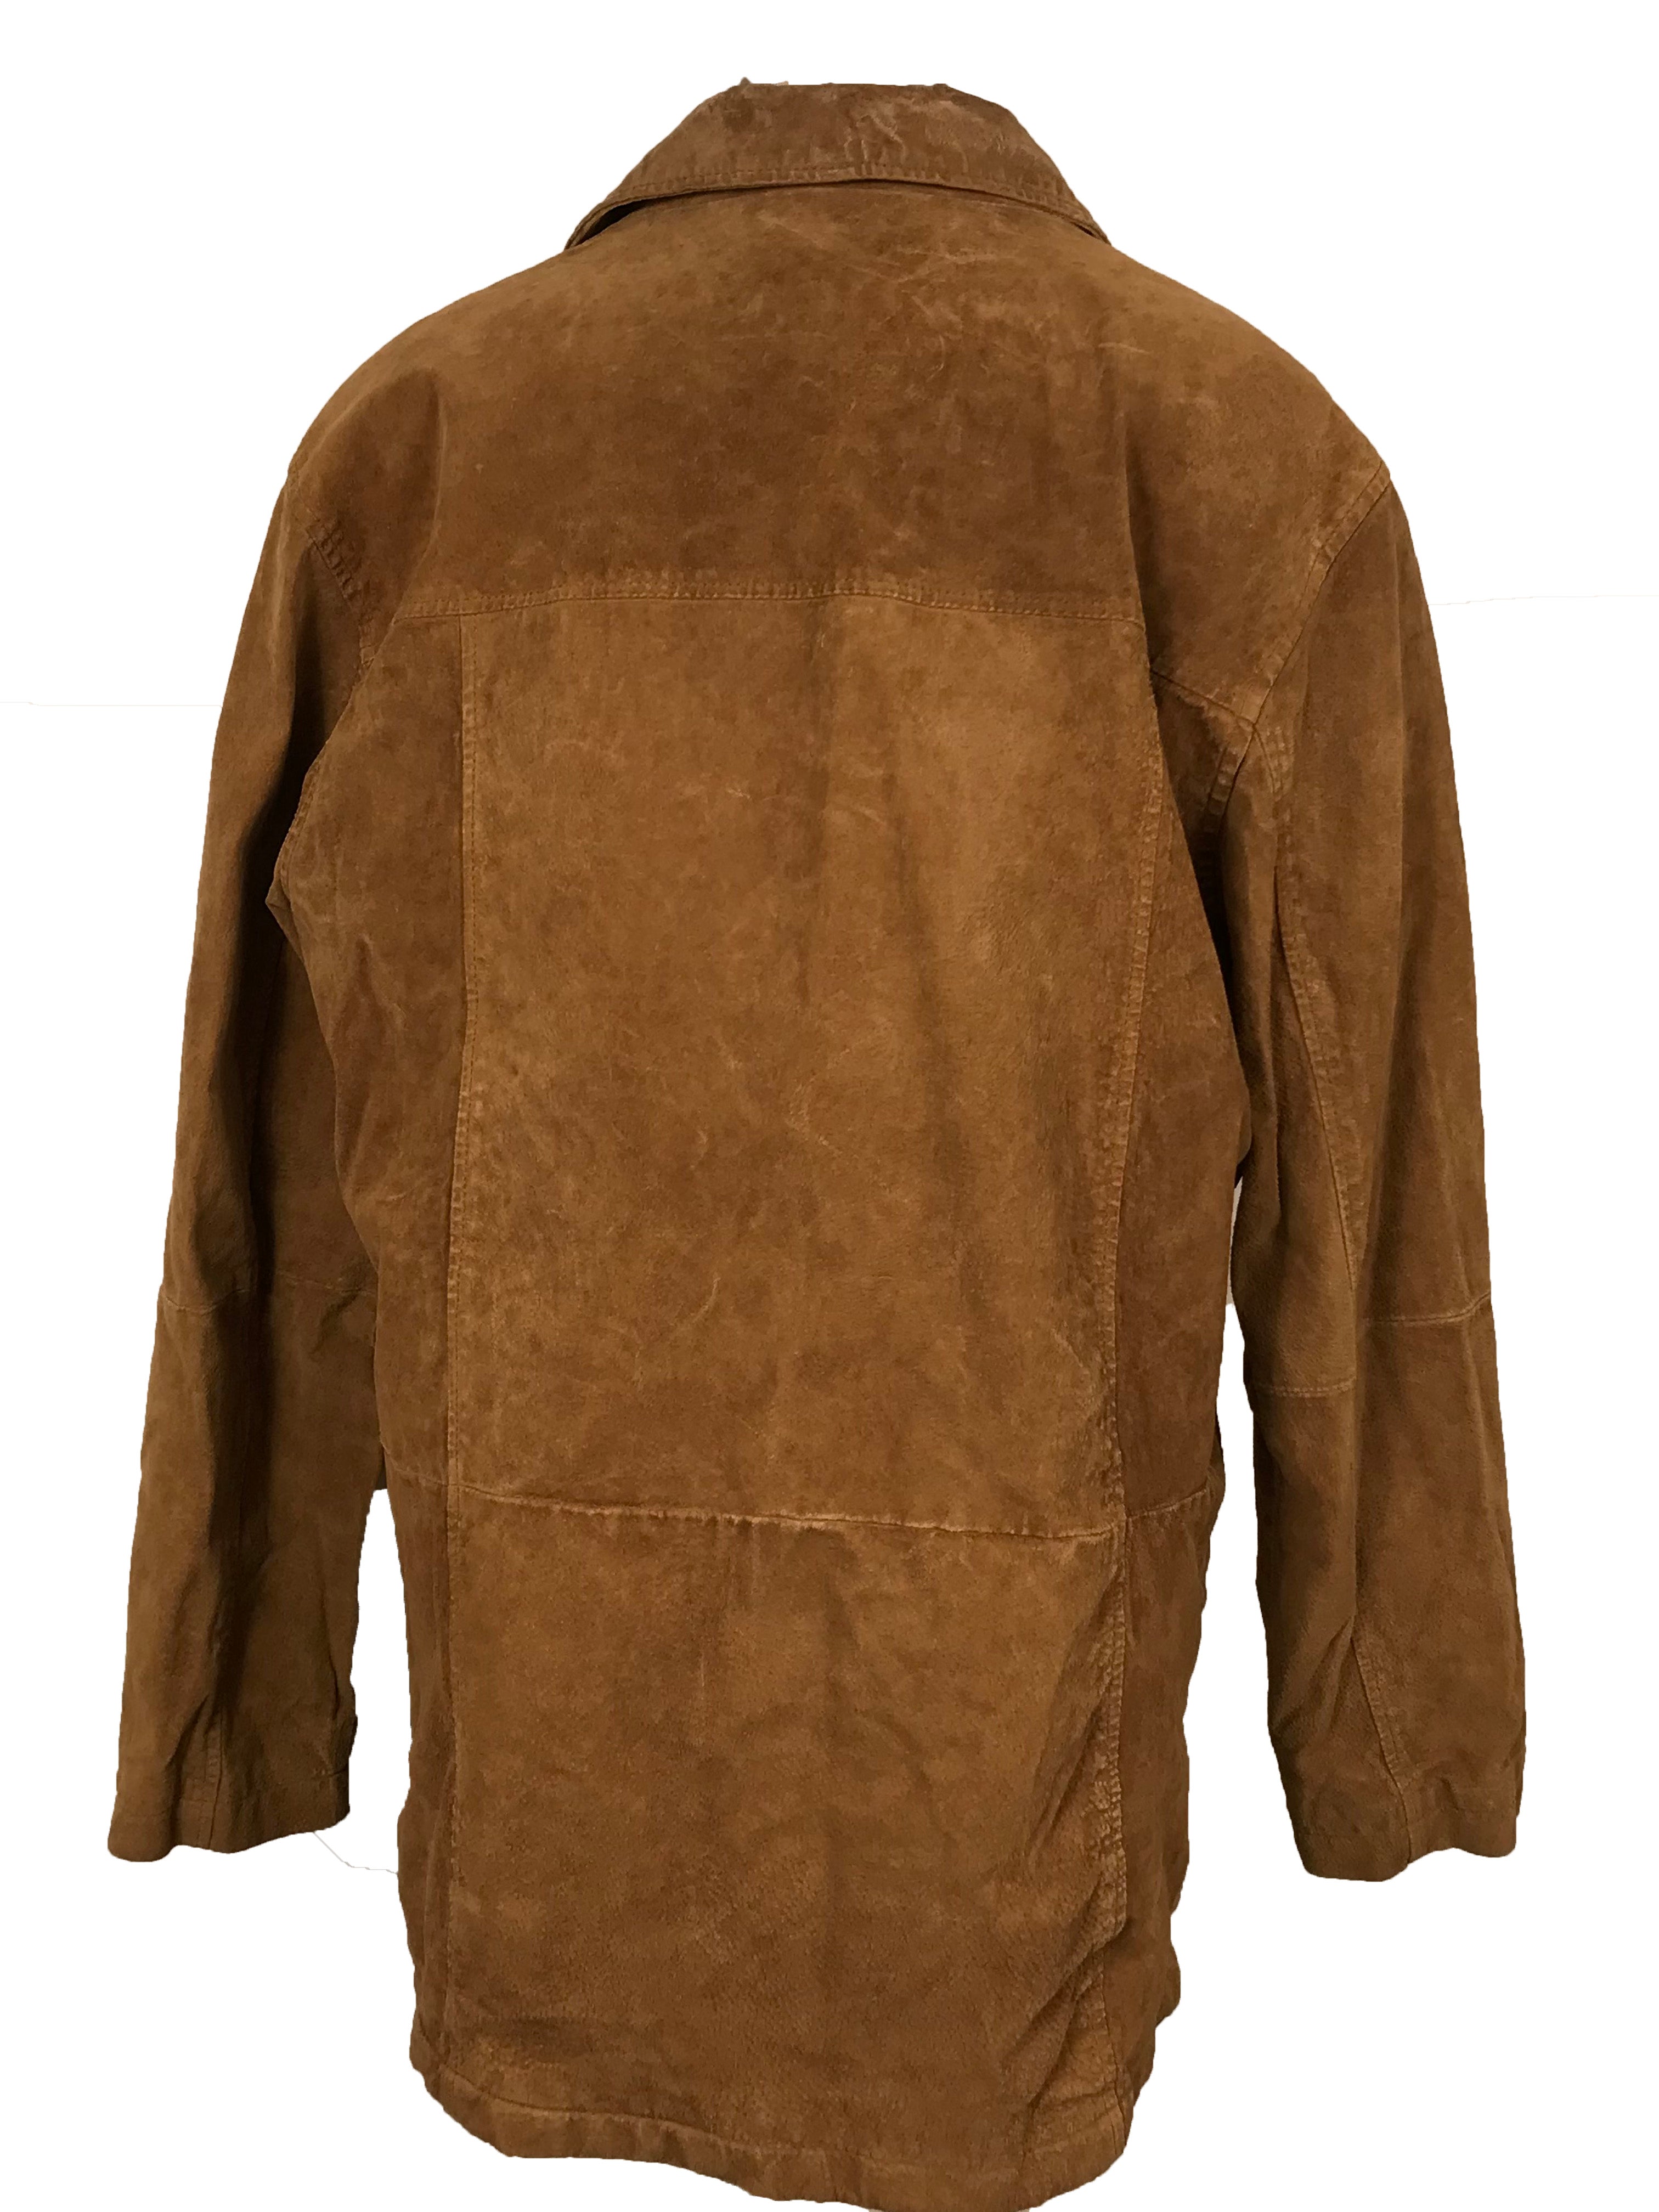 Cezani Beige Genuine Leather Jacket Size L